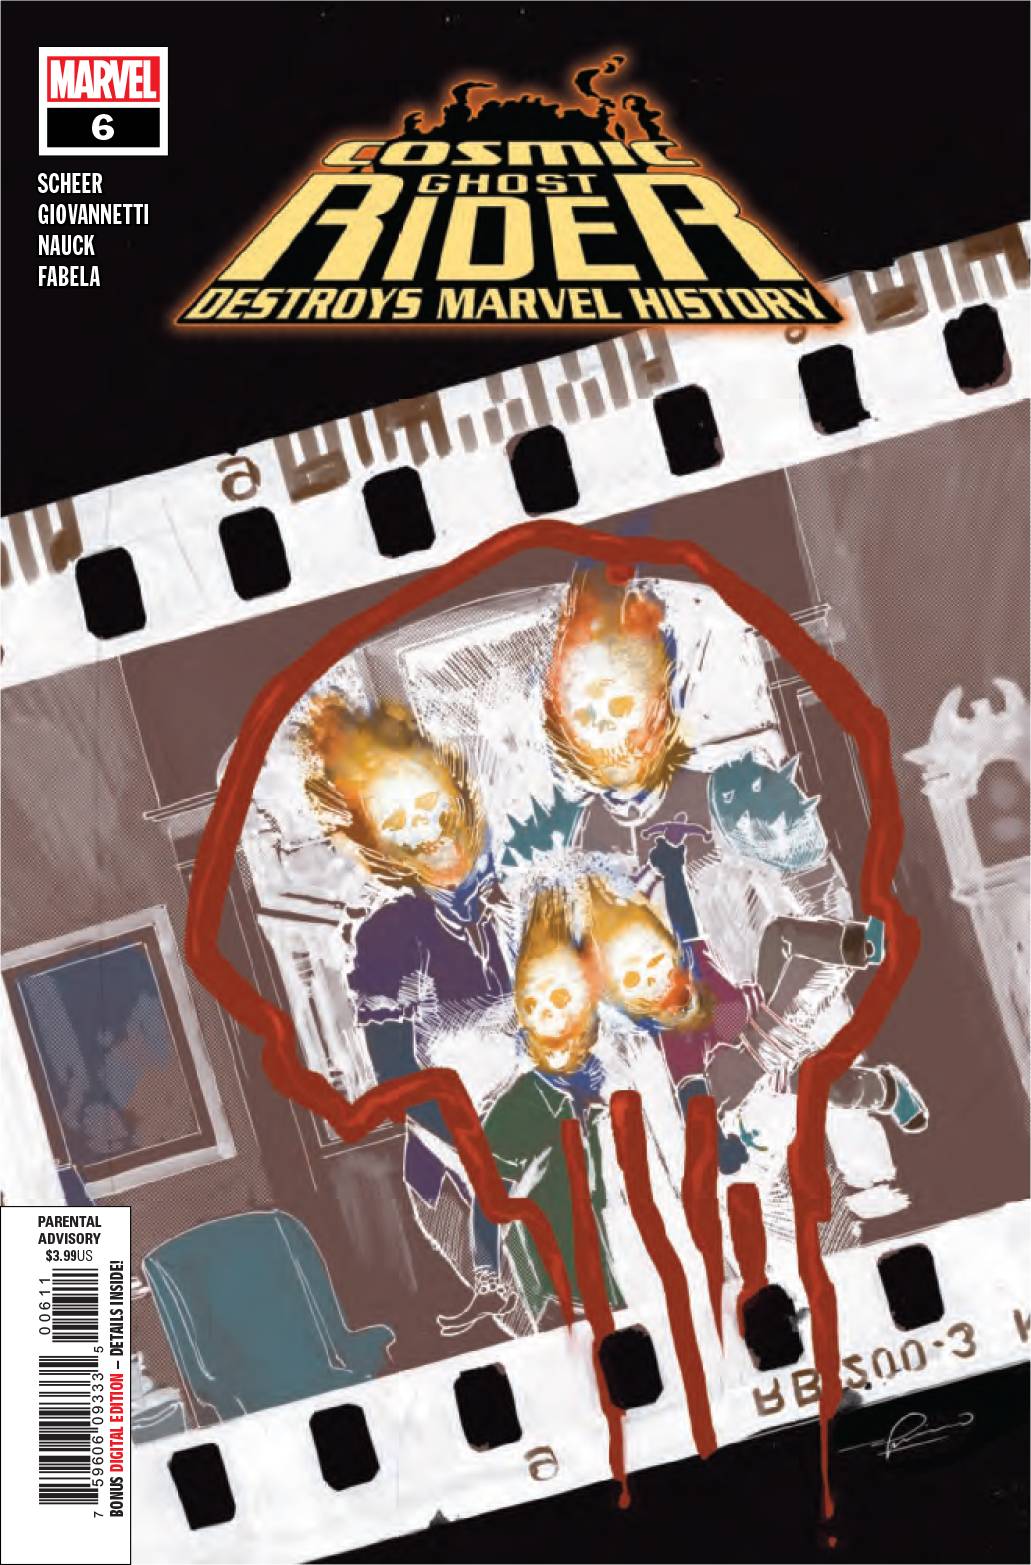 Cosmic Ghost Rider Destroys Marvel History #6 (Of 6)